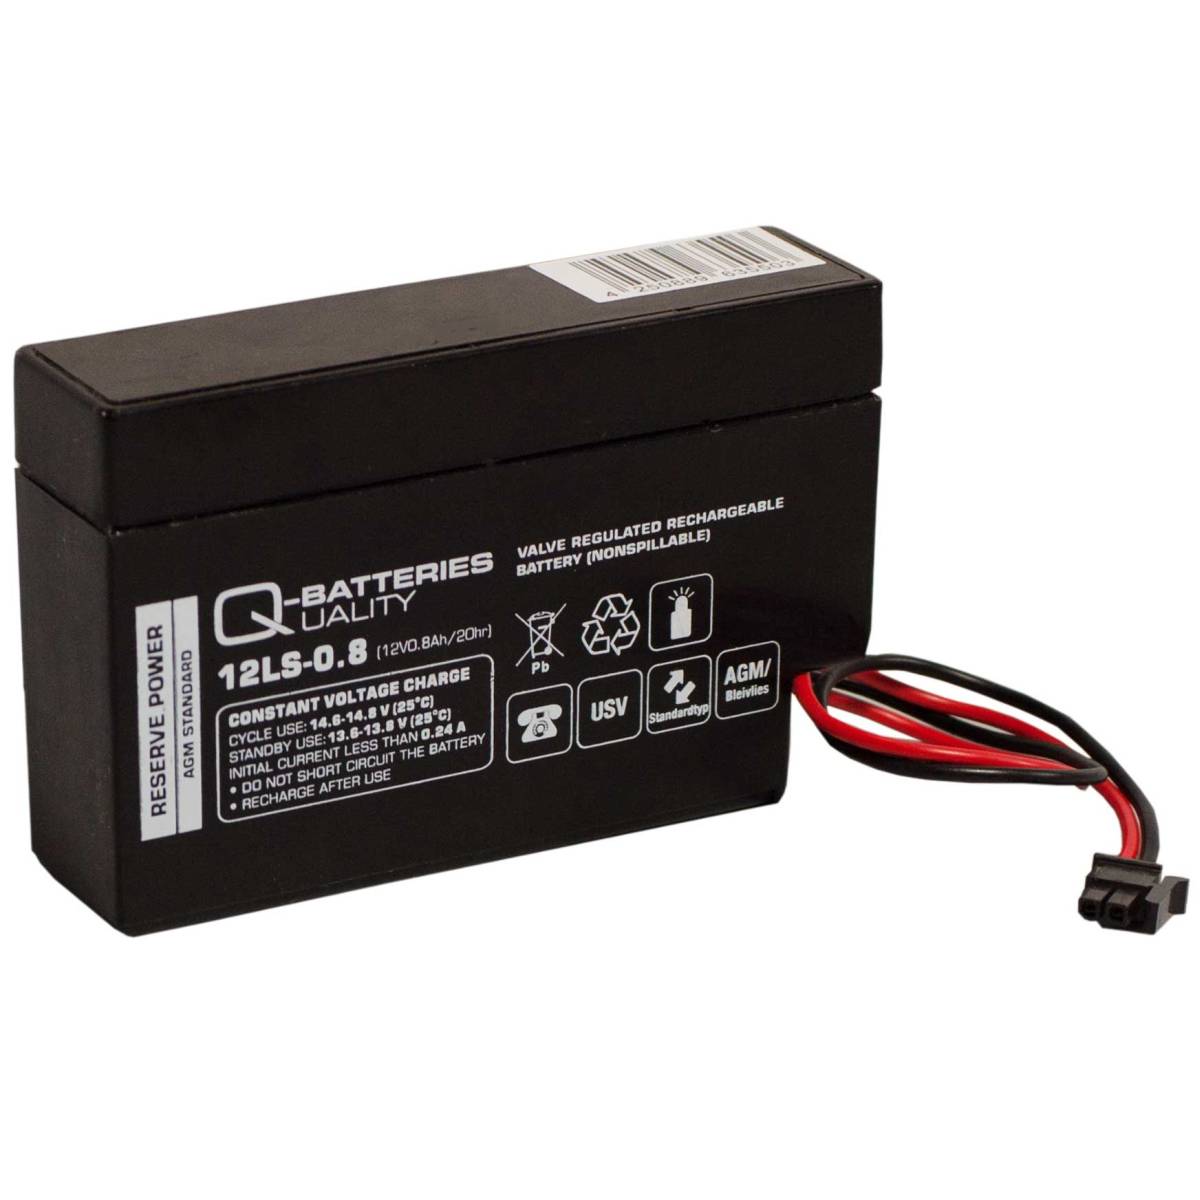 Q-Batteries 12LS-0.8 12V 0,8Ah AGM lead-fleece accumulator for